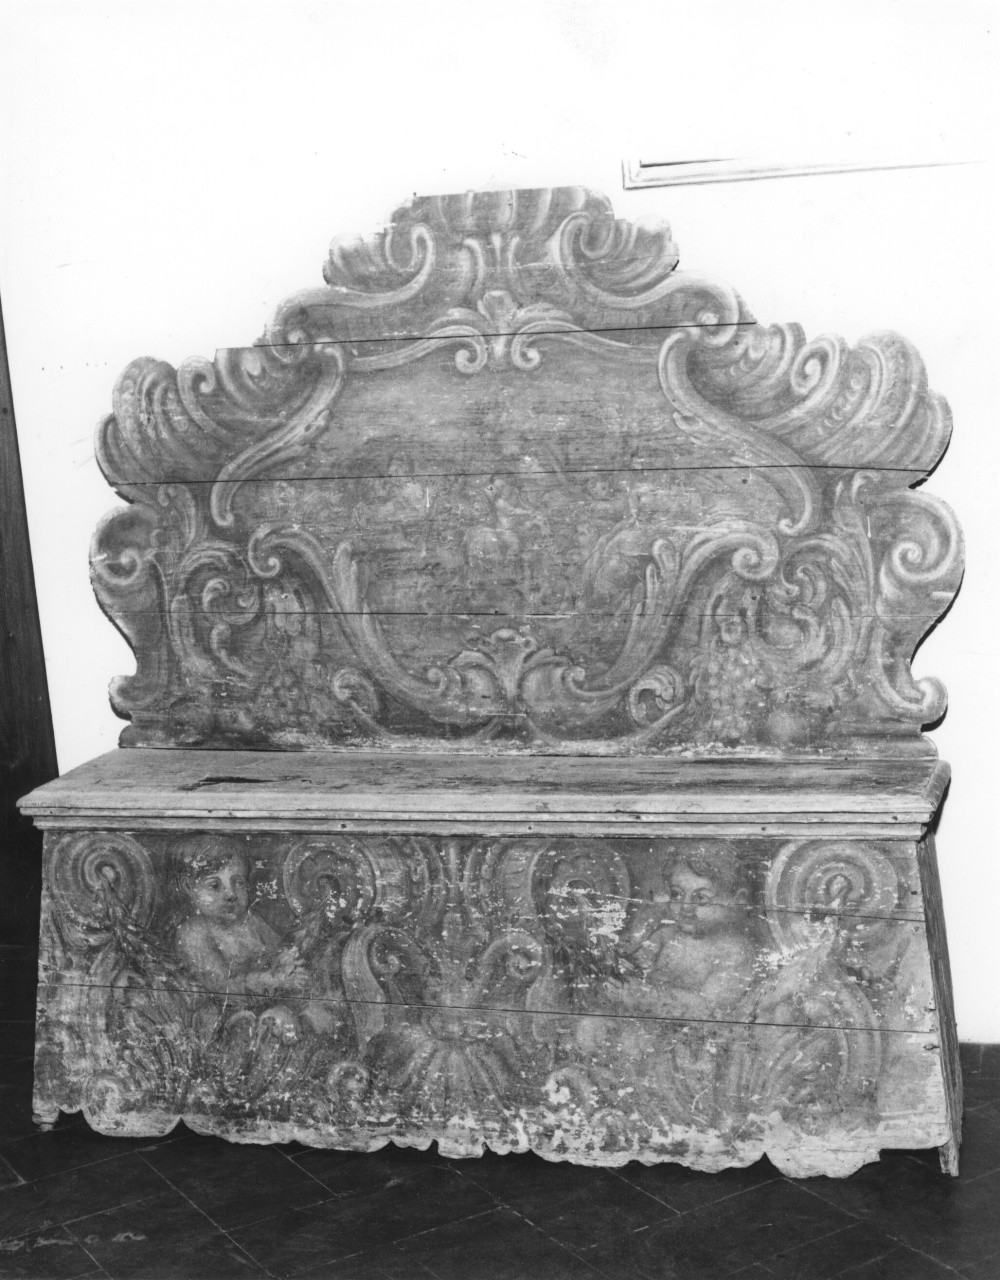 cherubini e motivi decorativi fitomorfi (cassapanca) - bottega toscana (metà sec. XVII)